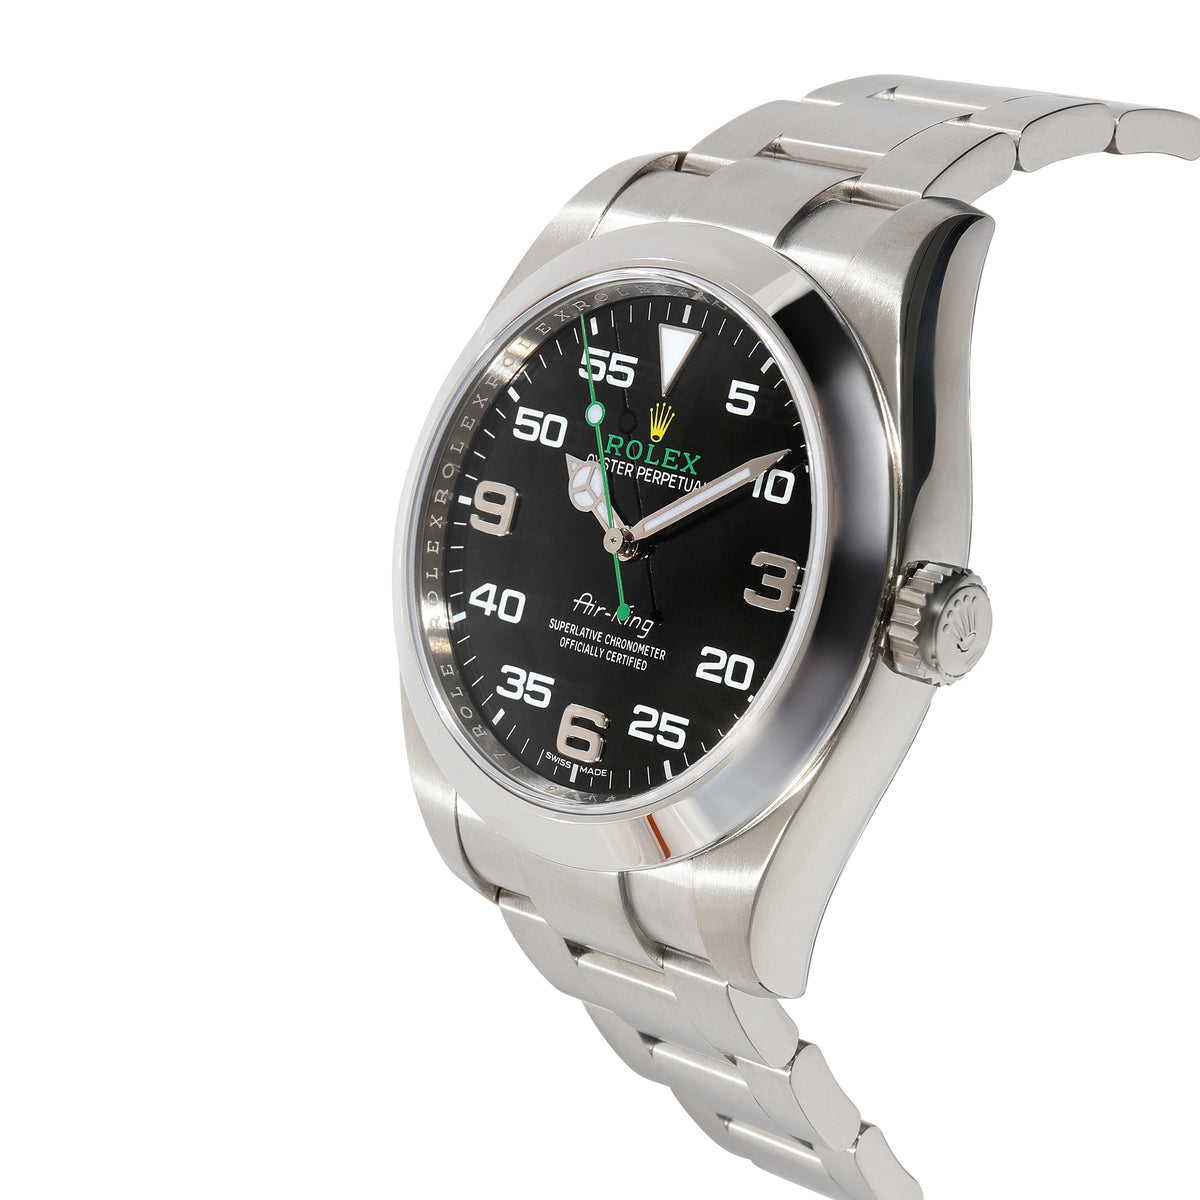 Rolex Air-King 116900 Men's Watch in  Stainless Steel